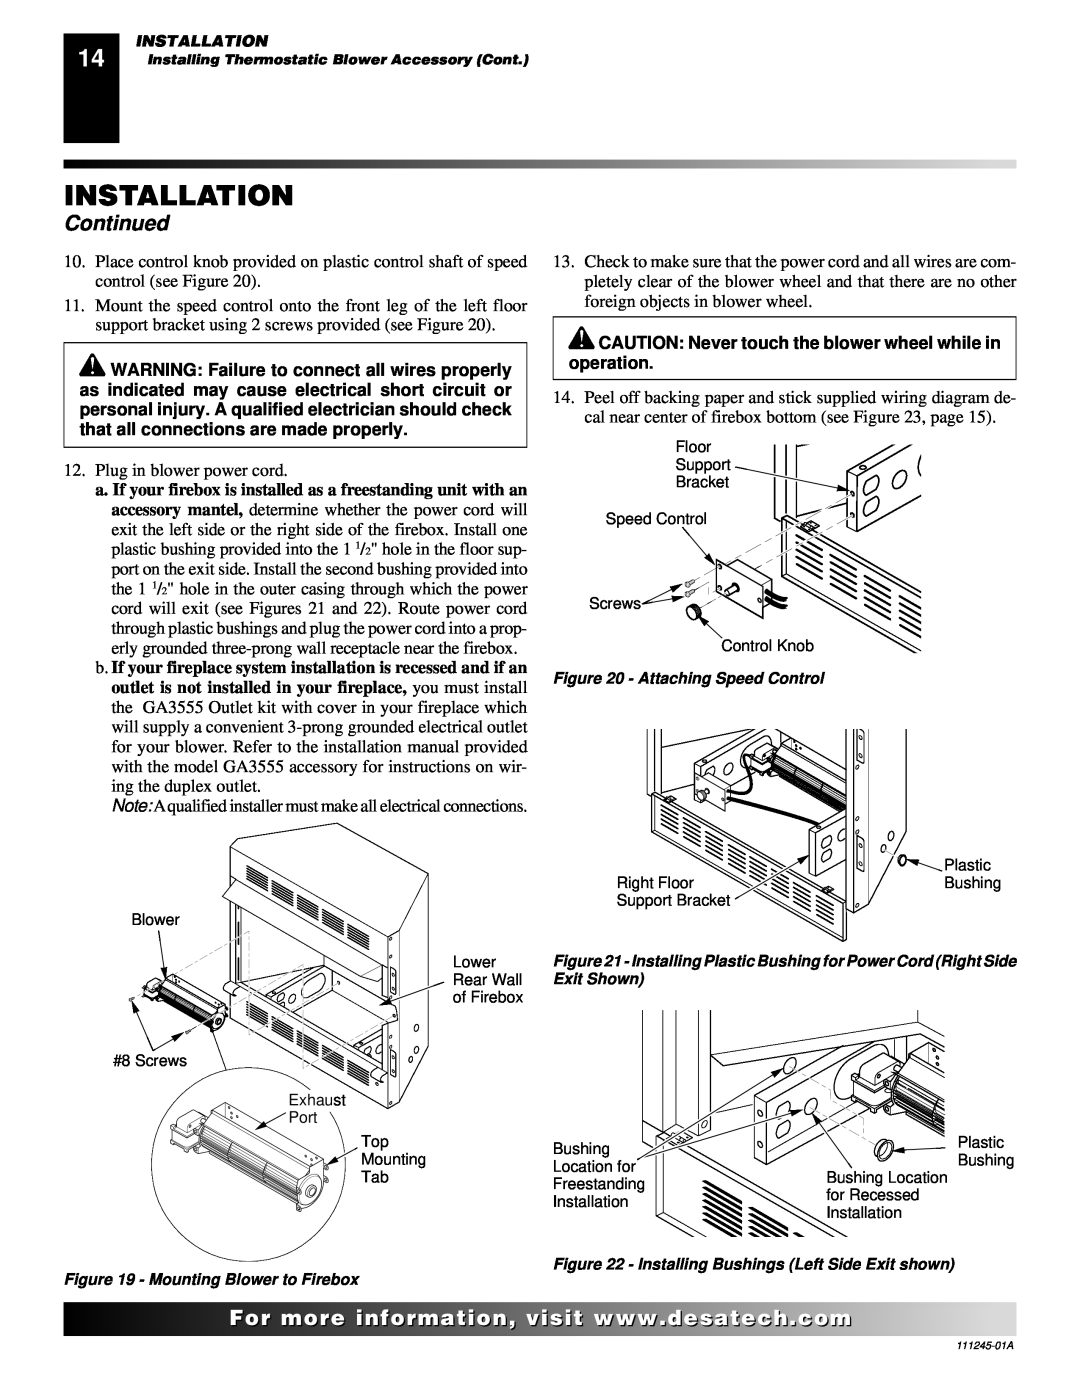 Desa CGEFP33PRB, CGEFP33NRB installation manual Installation, Continued, Plug in blower power cord 